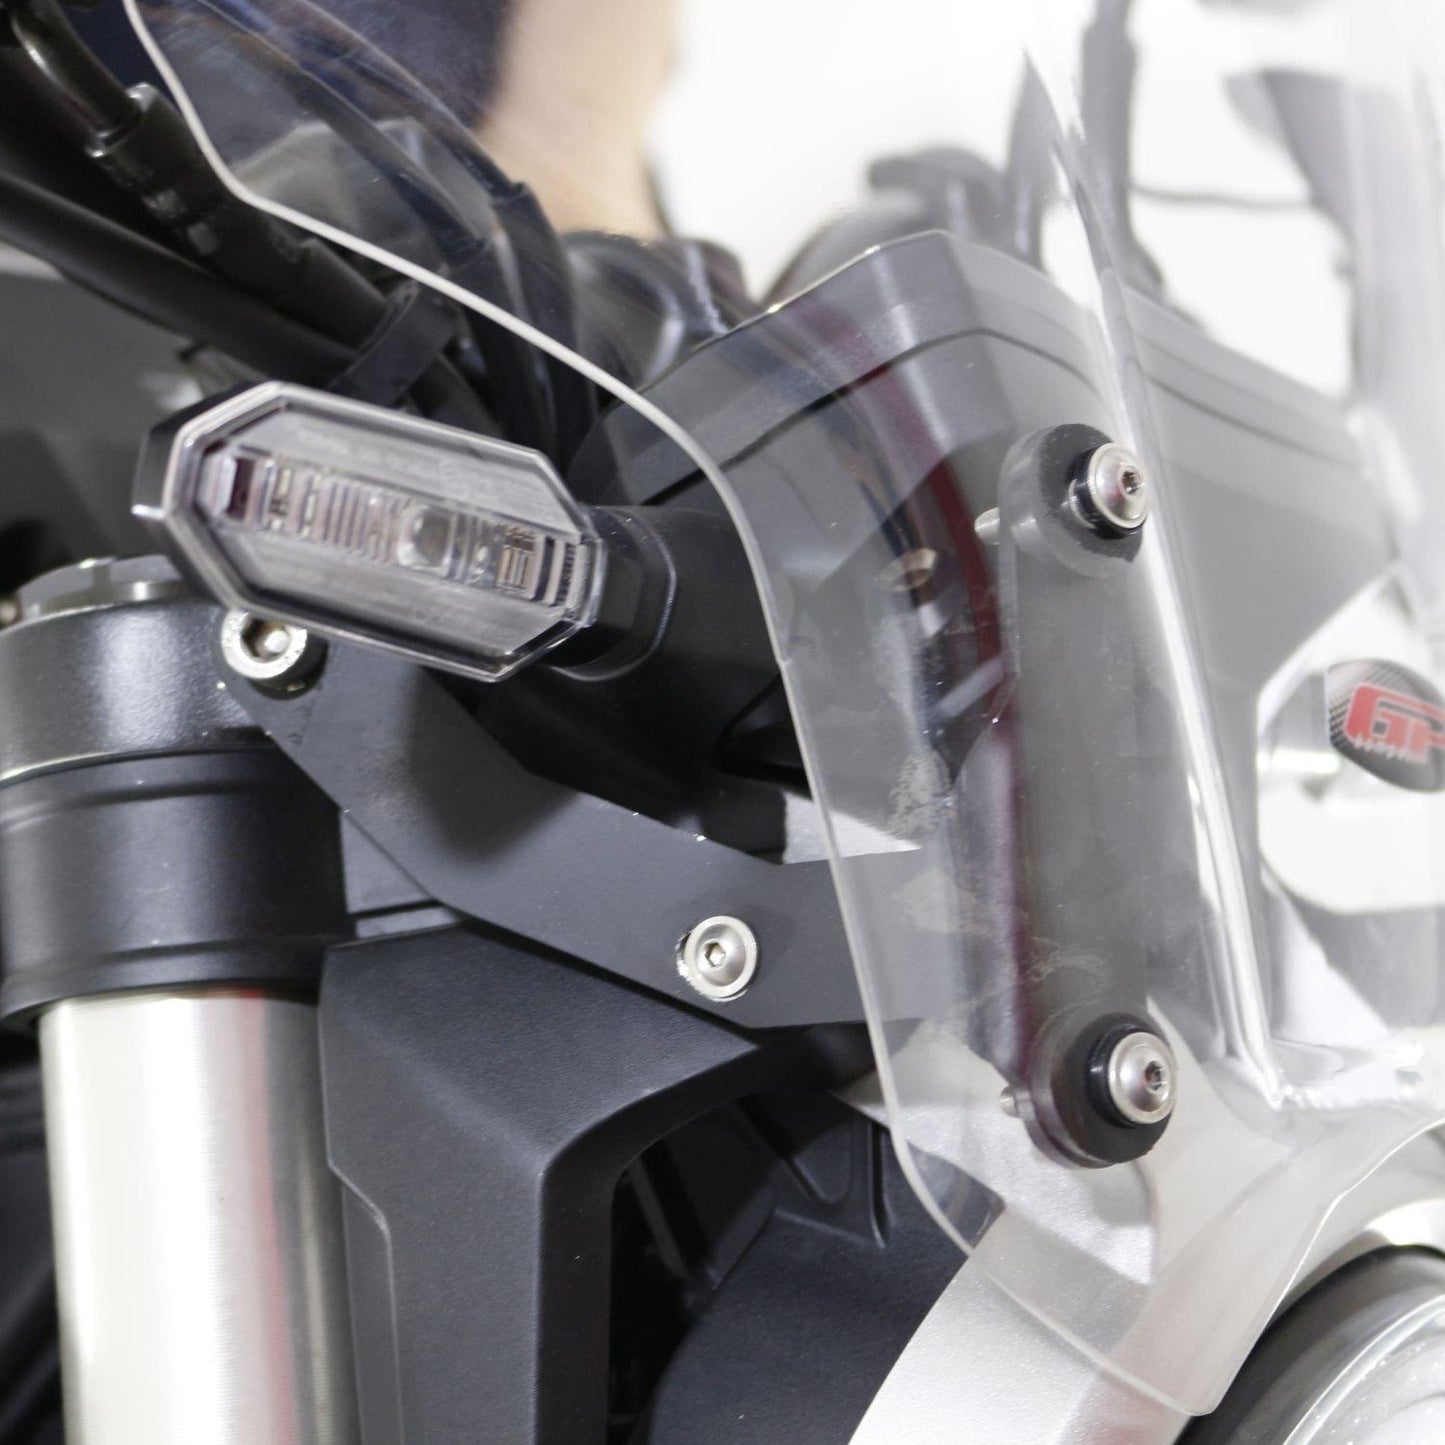 Honda CB300R touring clear windscreen 49 cm 18-22